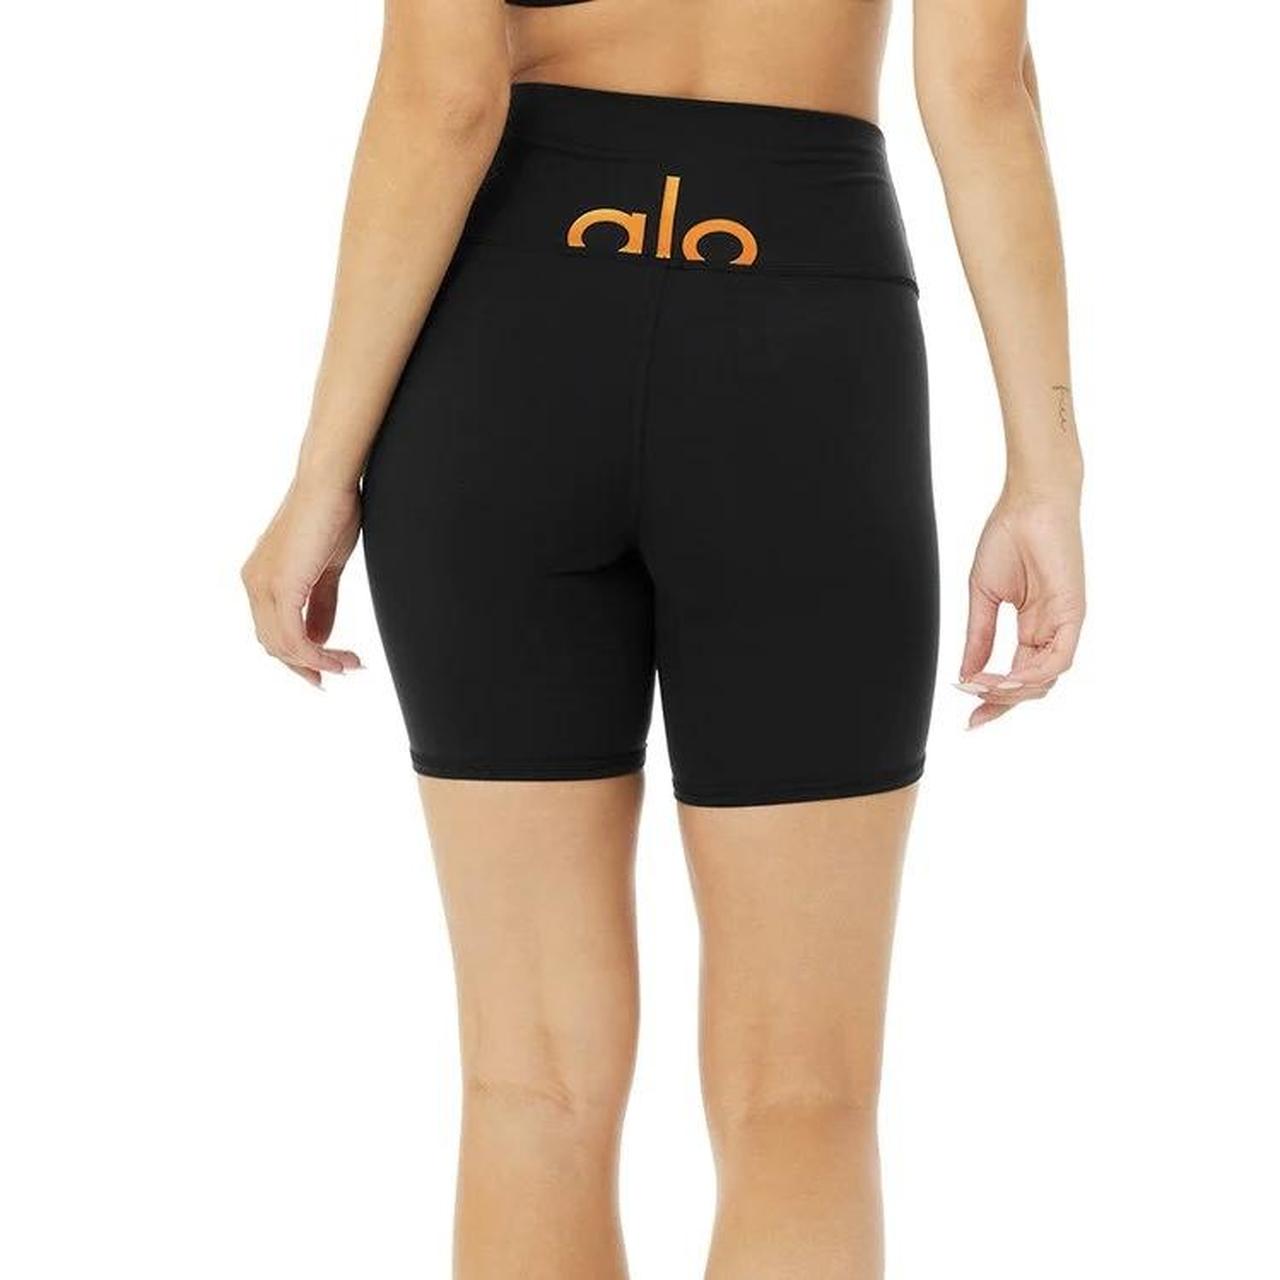 Alo Yoga biker/cargo shorts 2 fully functional - Depop